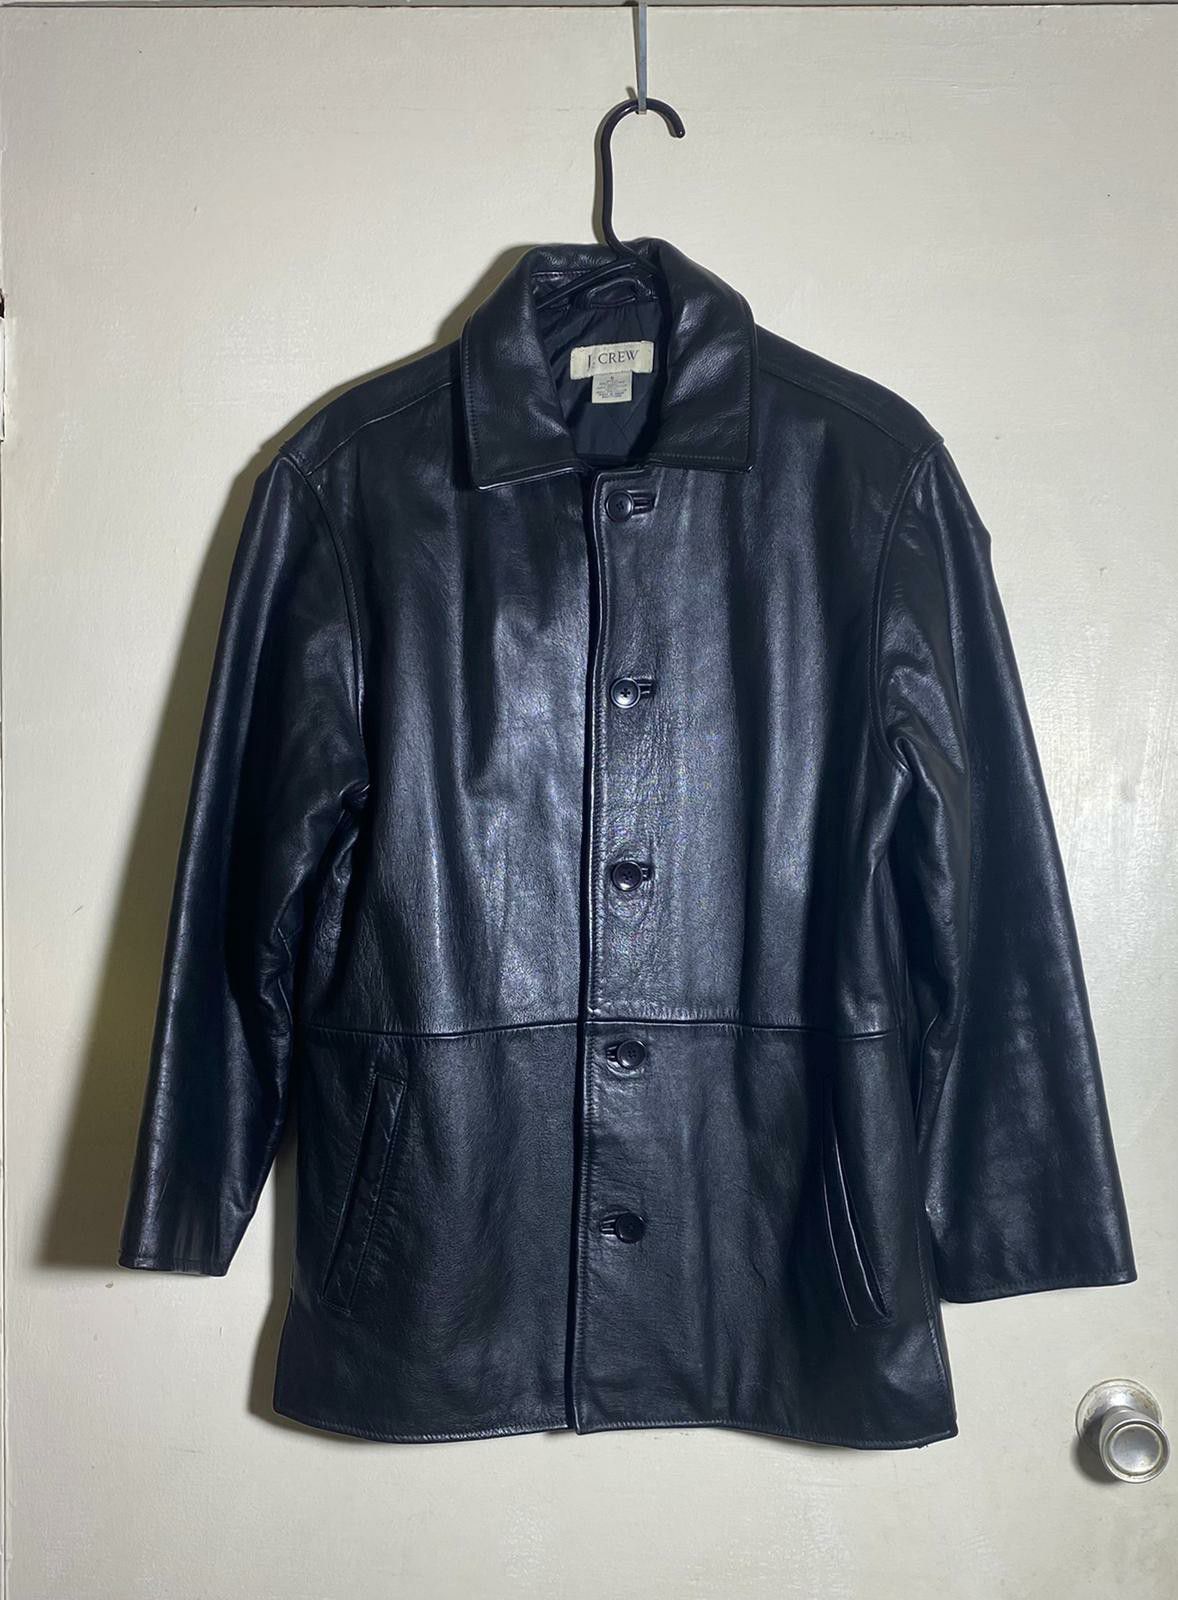 J Crew small leather jacket black